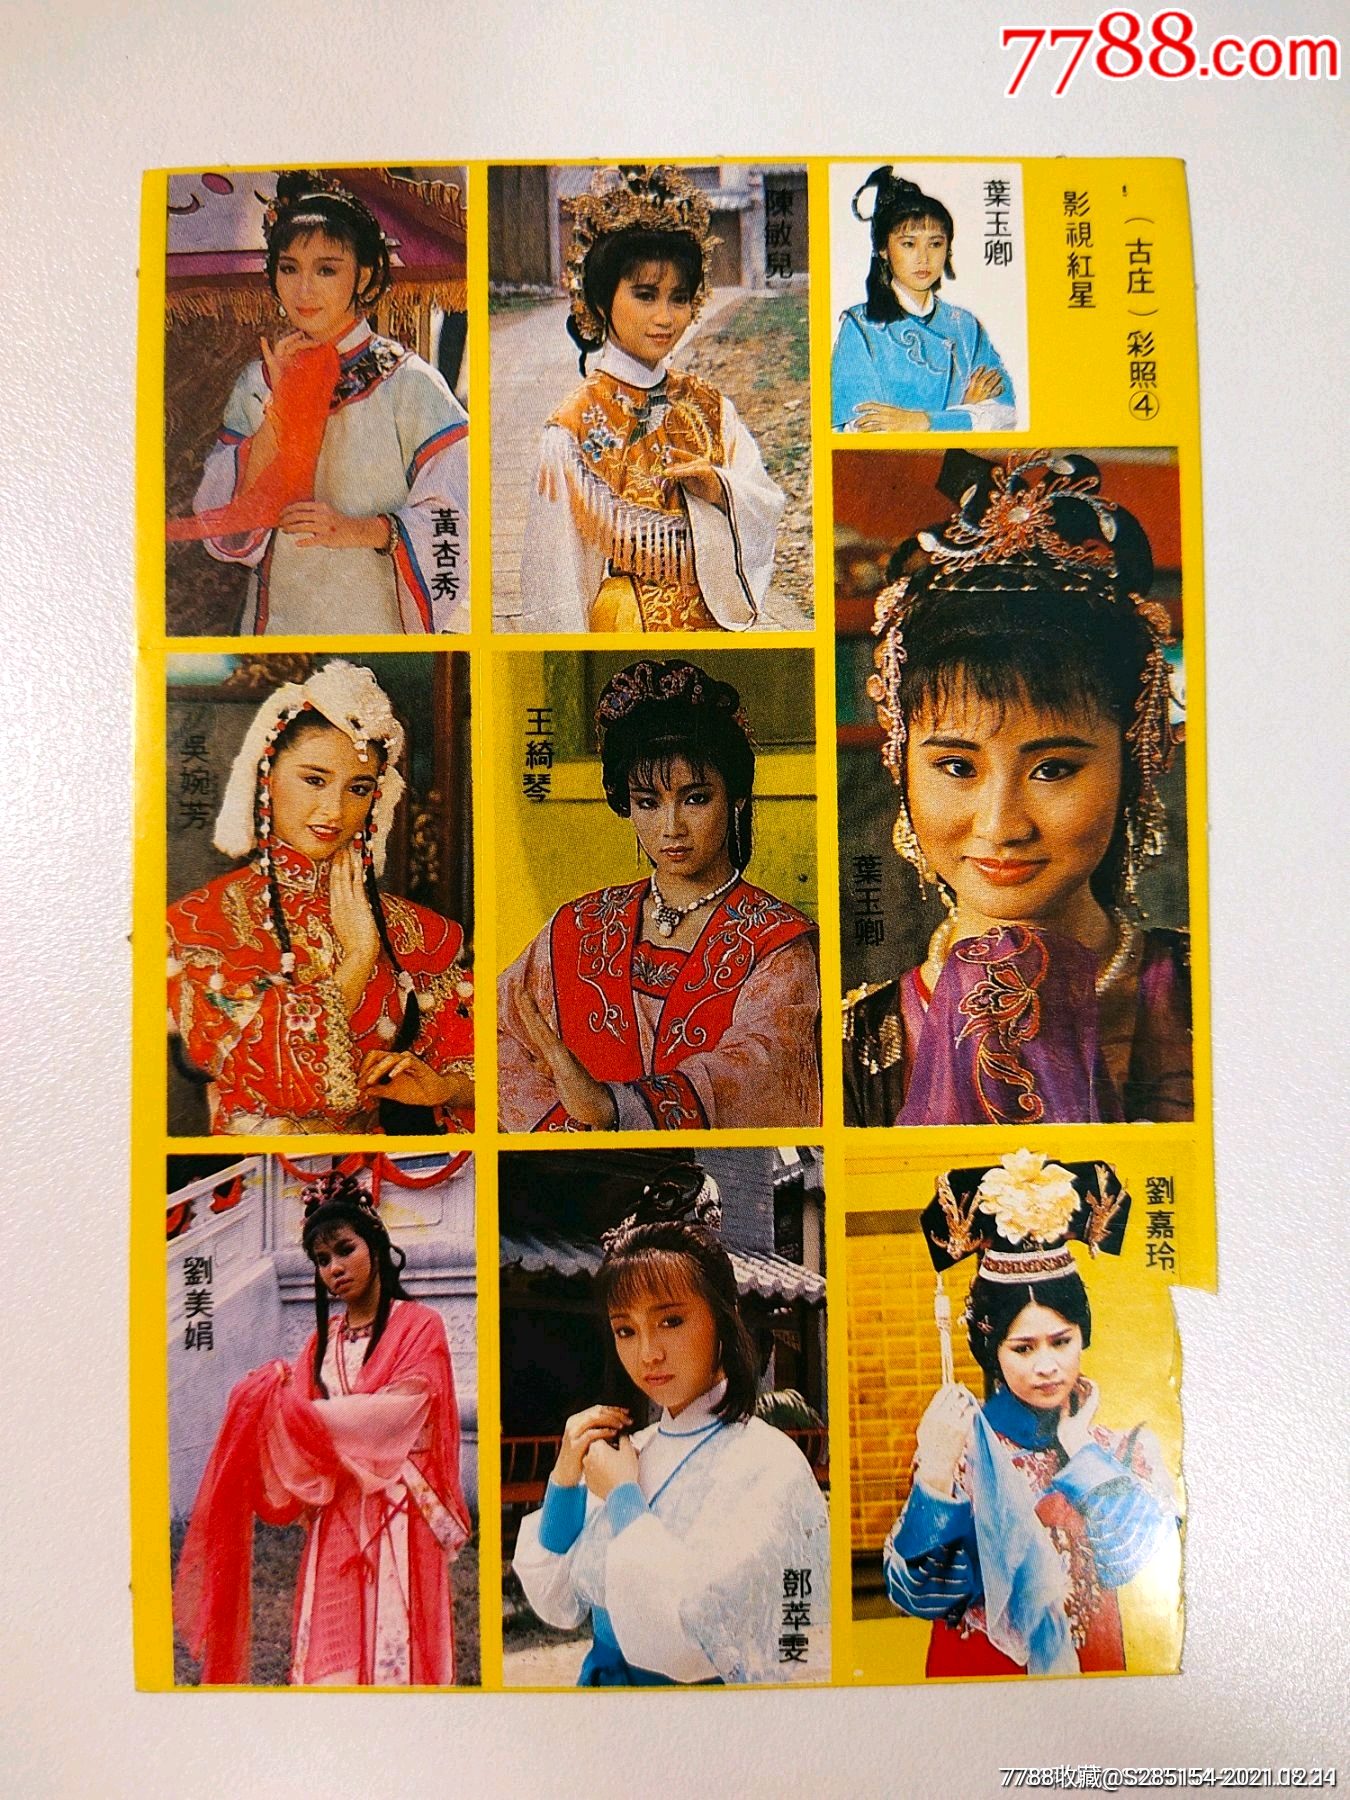 TVB七十年代 “古装皇后” —— 黄杏秀个人资料 | 人物集